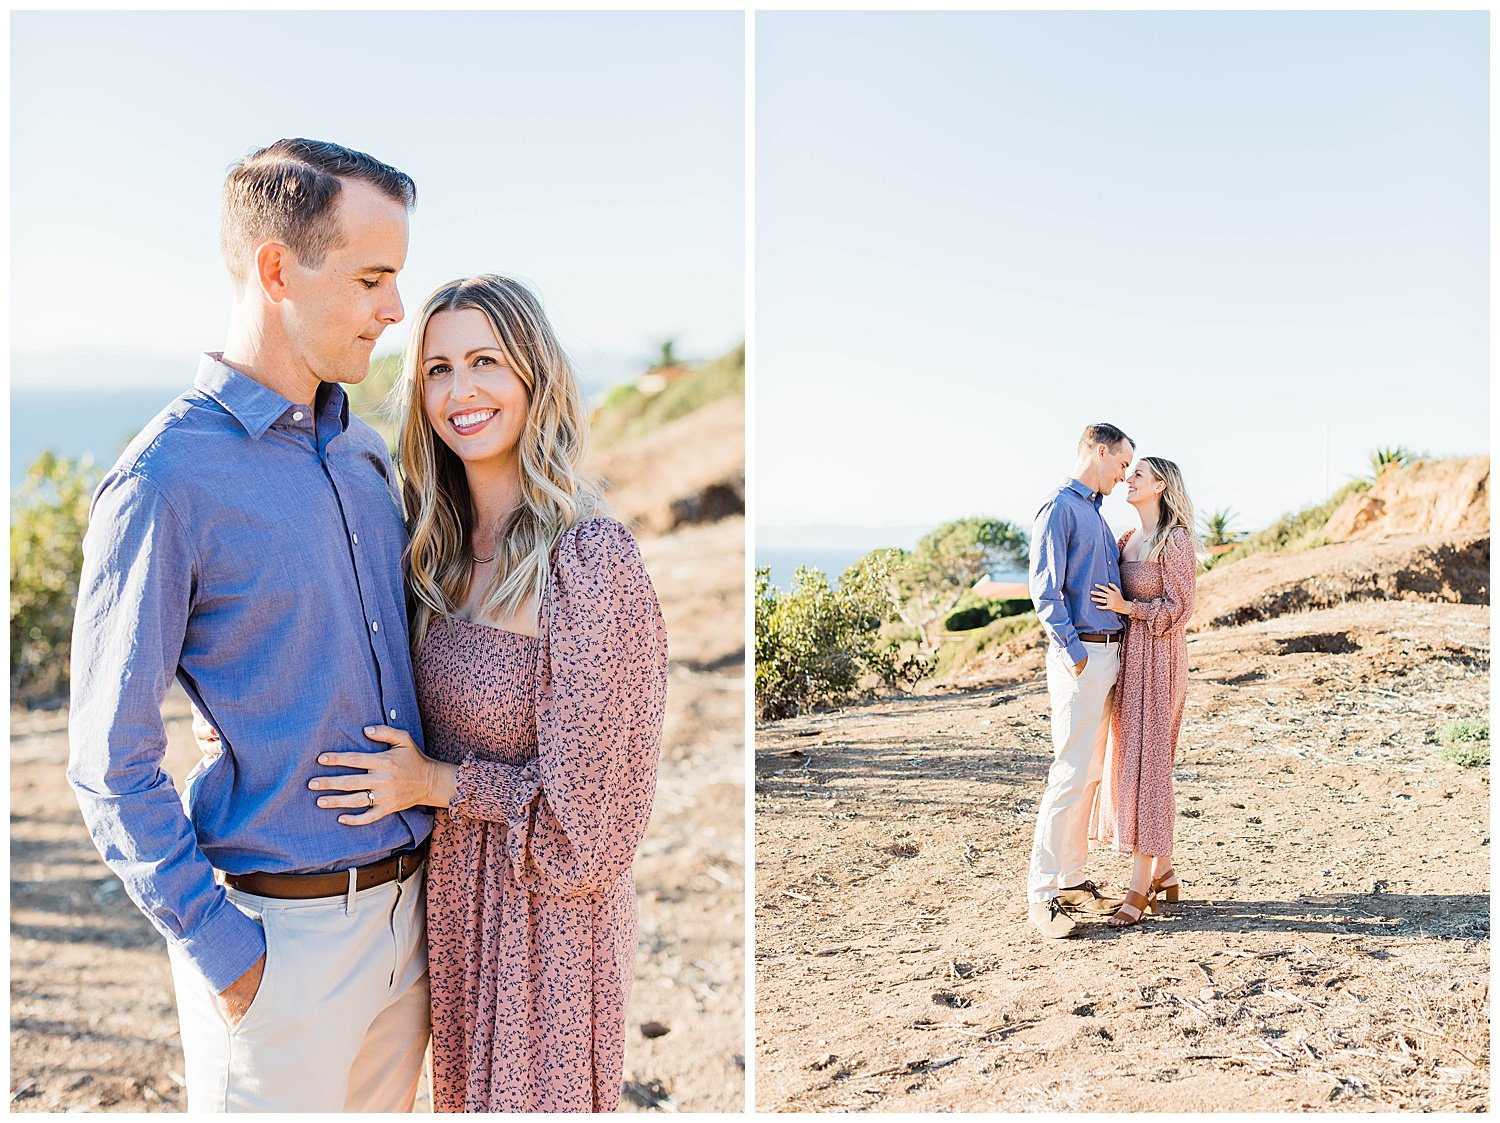 Couples photography by Hermosa Beach photographer, Jennifer Faulk